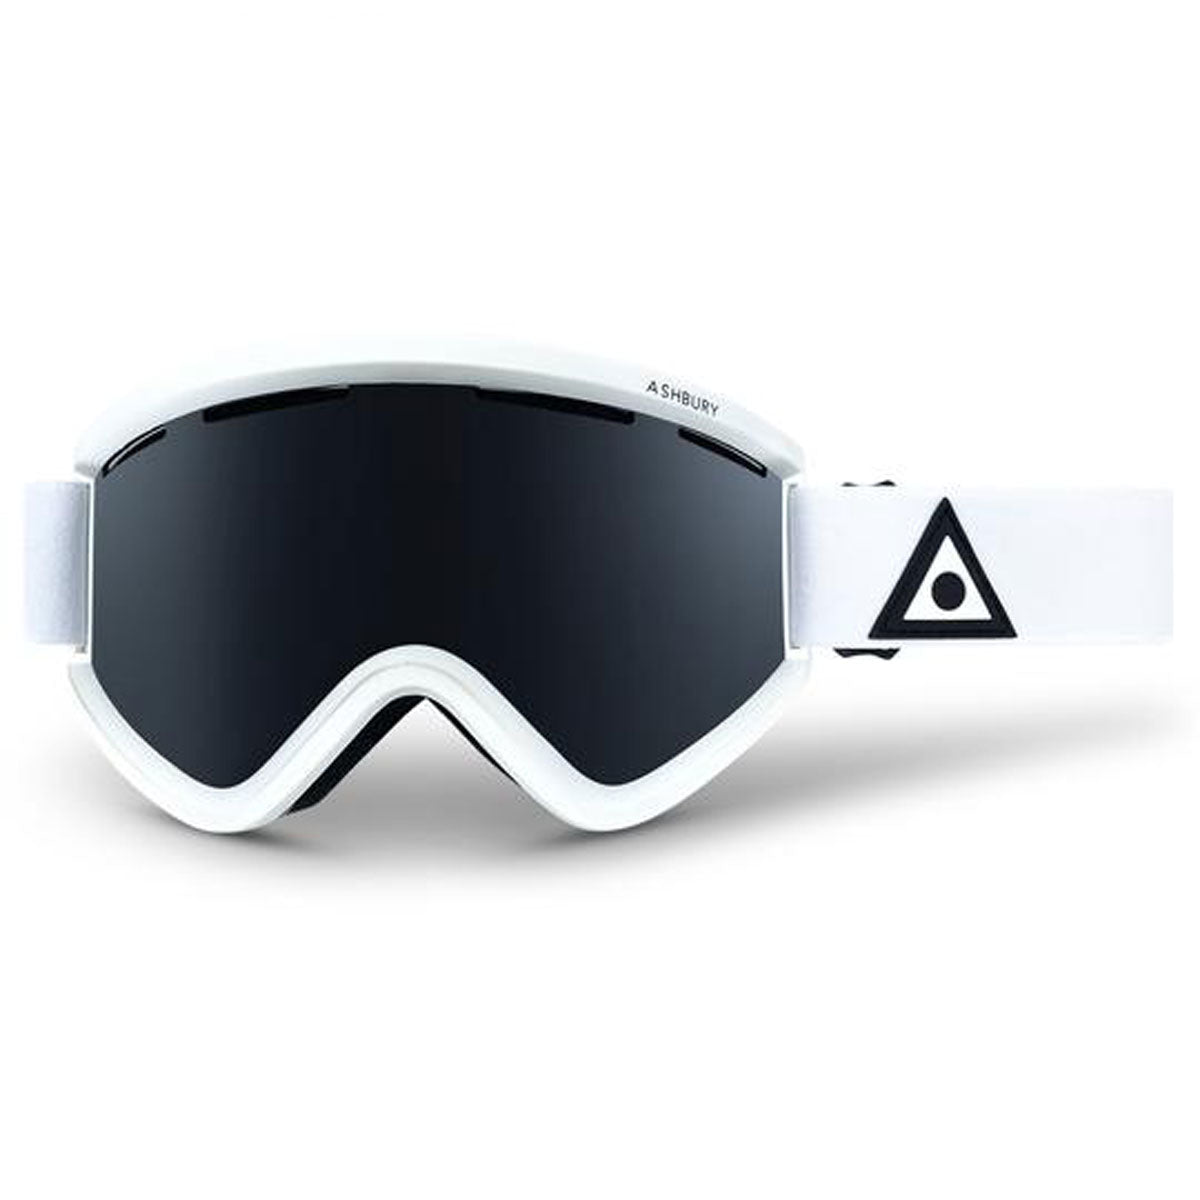 Ashbury Blackbird White Triangle Snowboard Goggles - Dark Smoke/Yellow Spare image 1